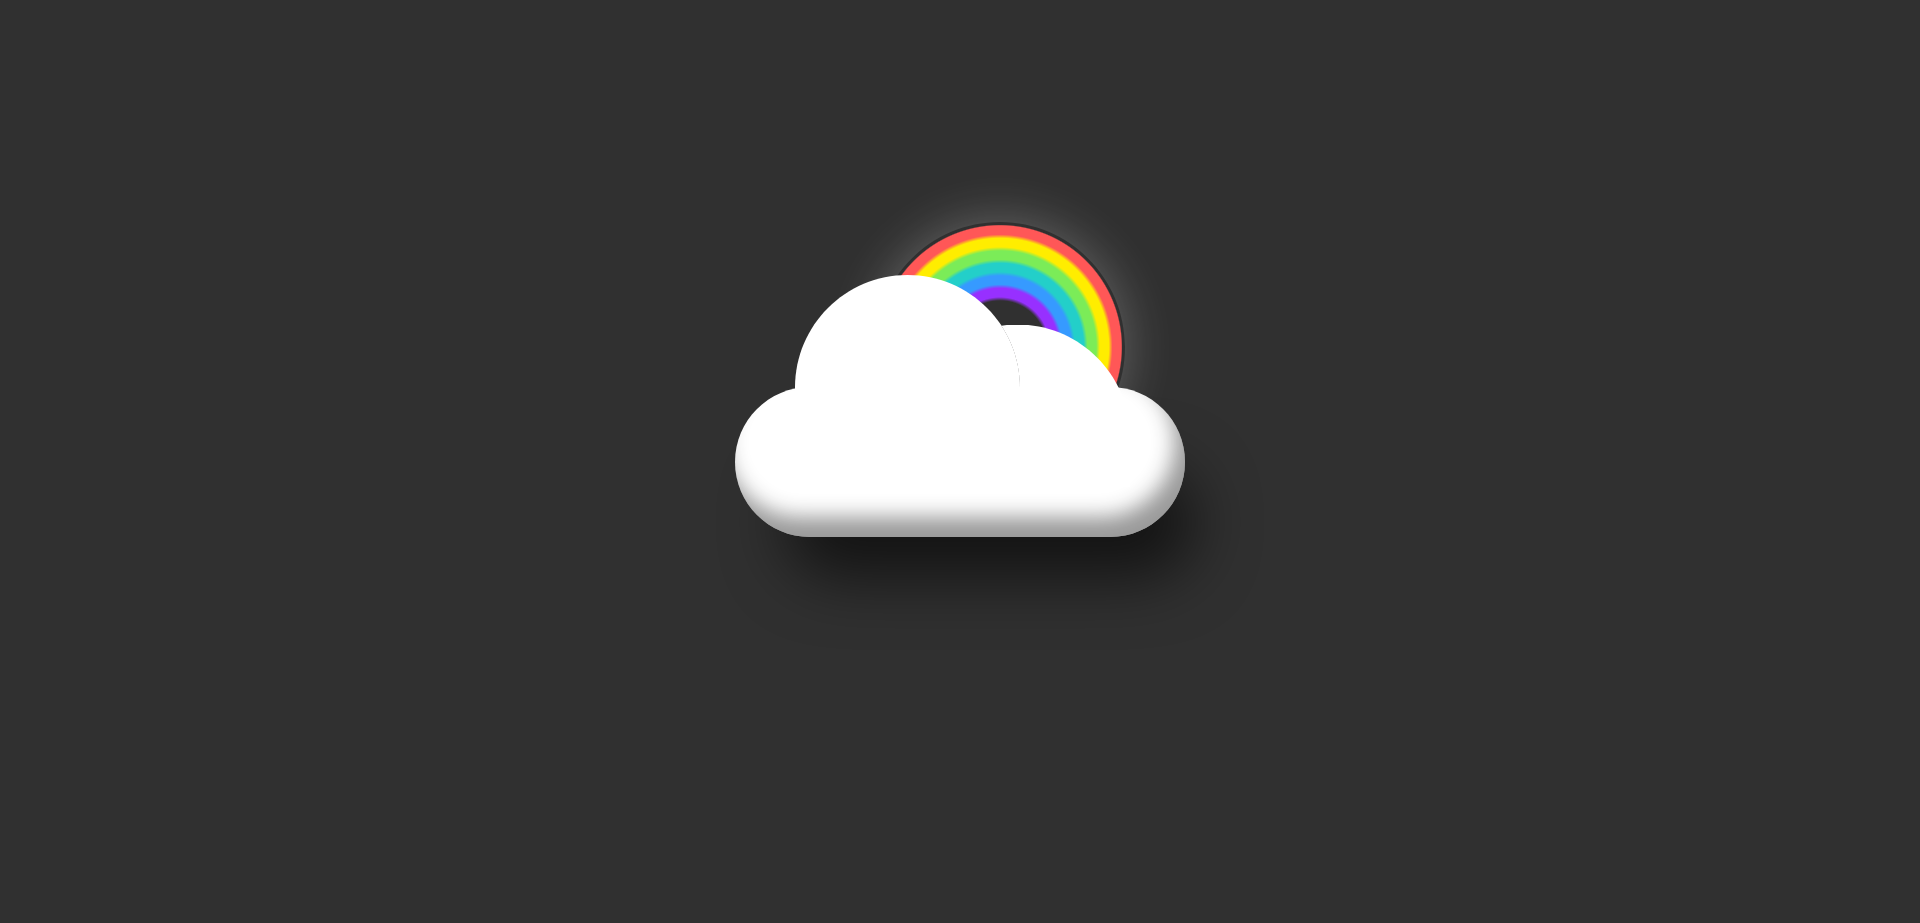 Cloud and rainbow using CSS